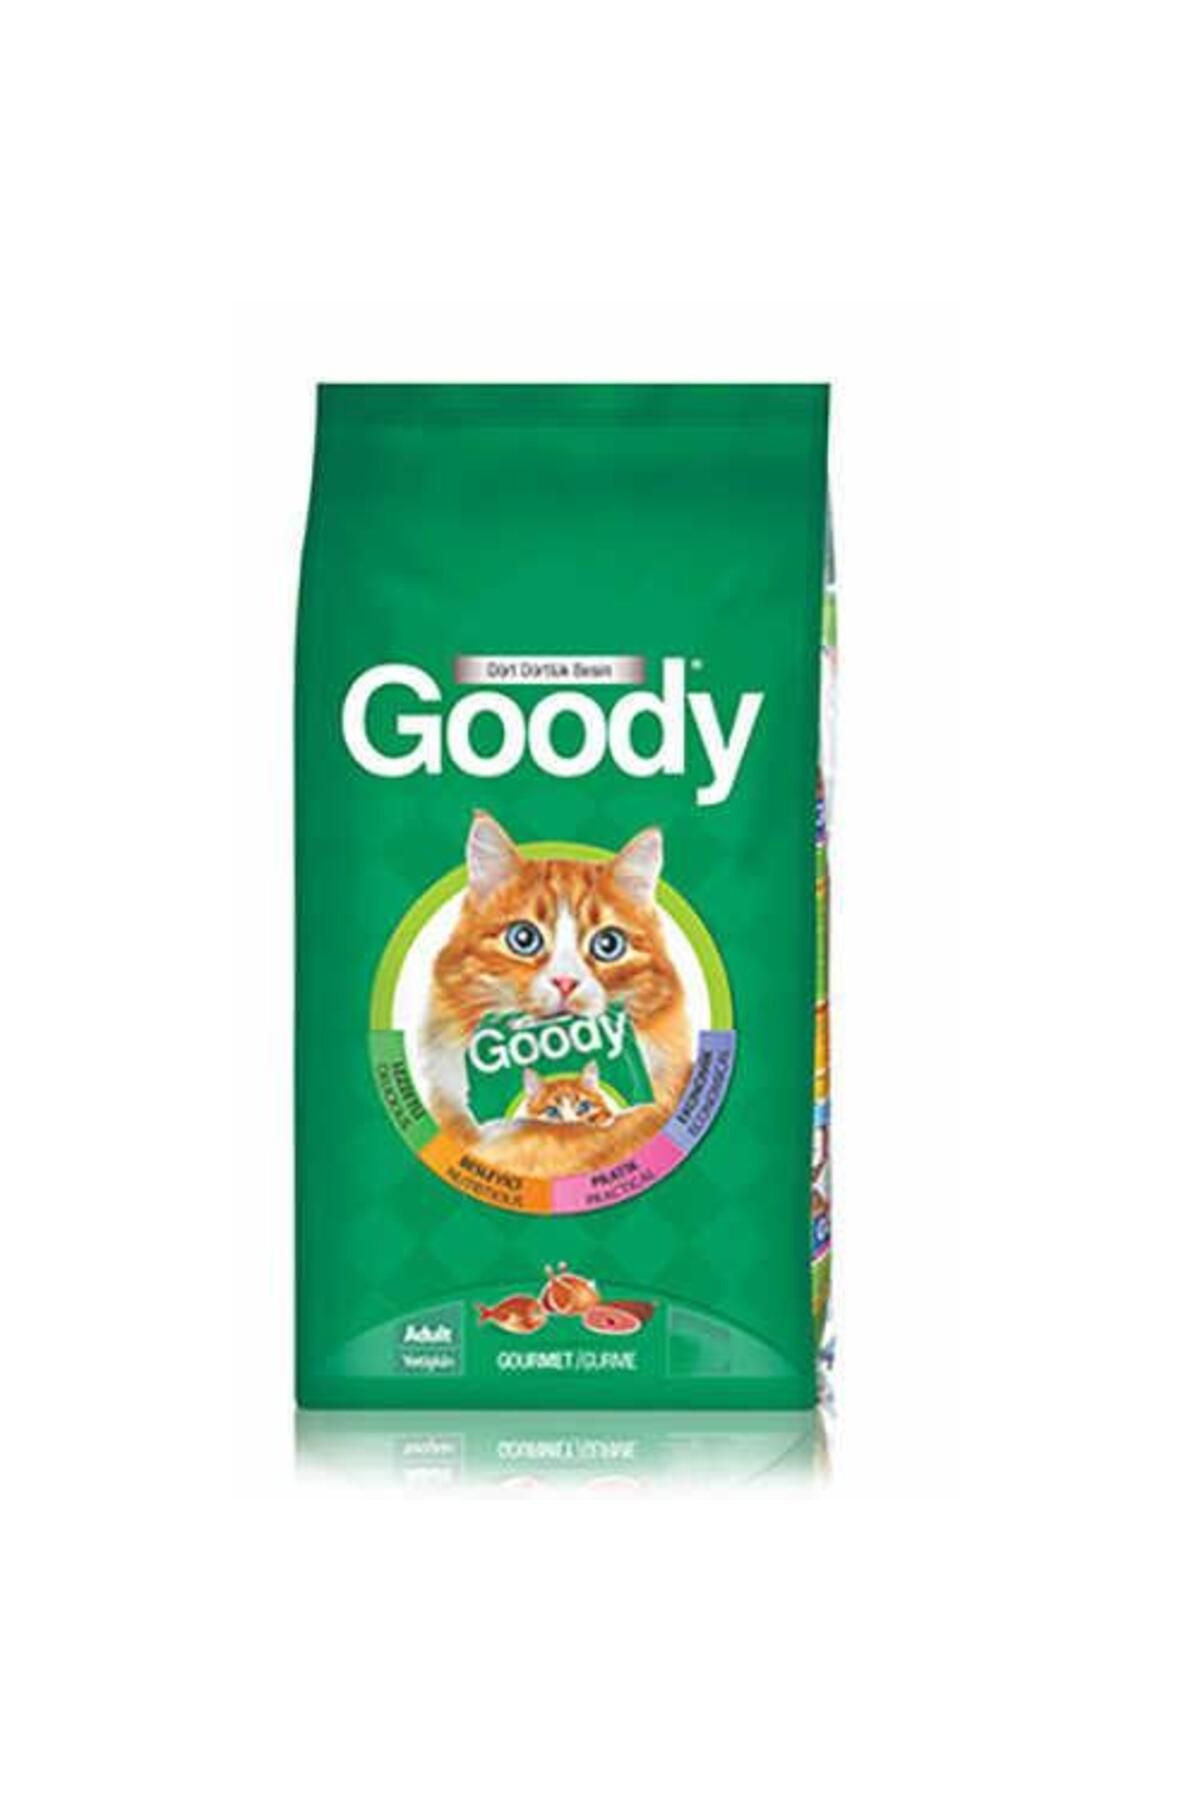 Goody Gourmet Renkli Taneli Kedi Maması 15 Kg